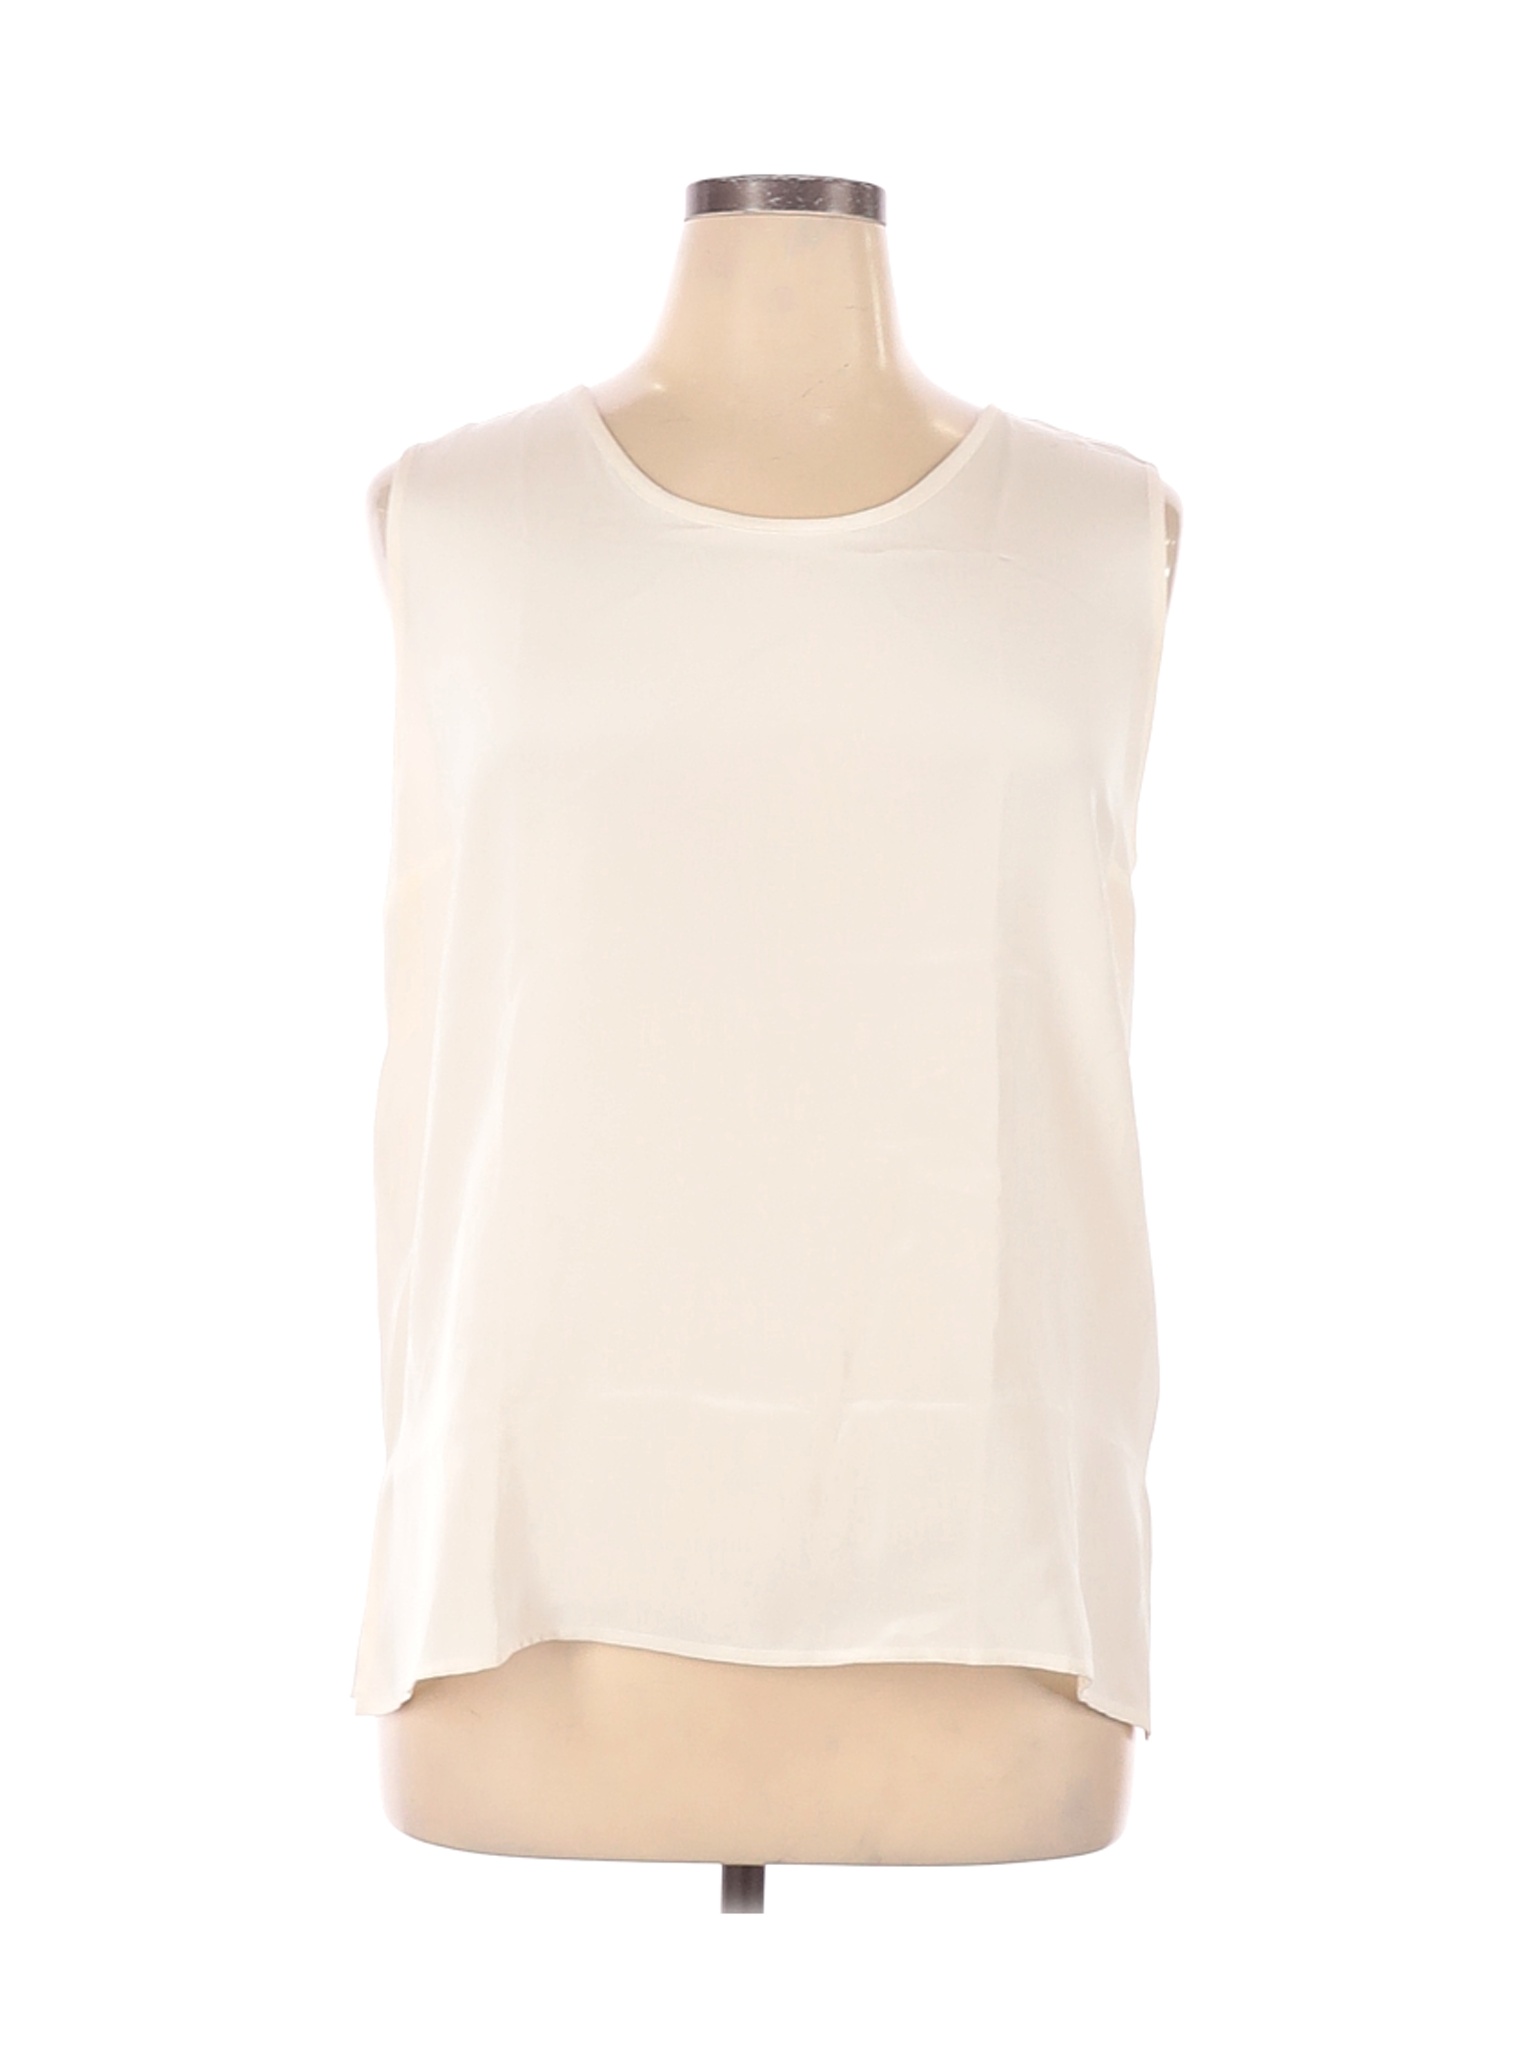 Caroline Rose Women Ivory Sleeveless Silk Top XL | eBay